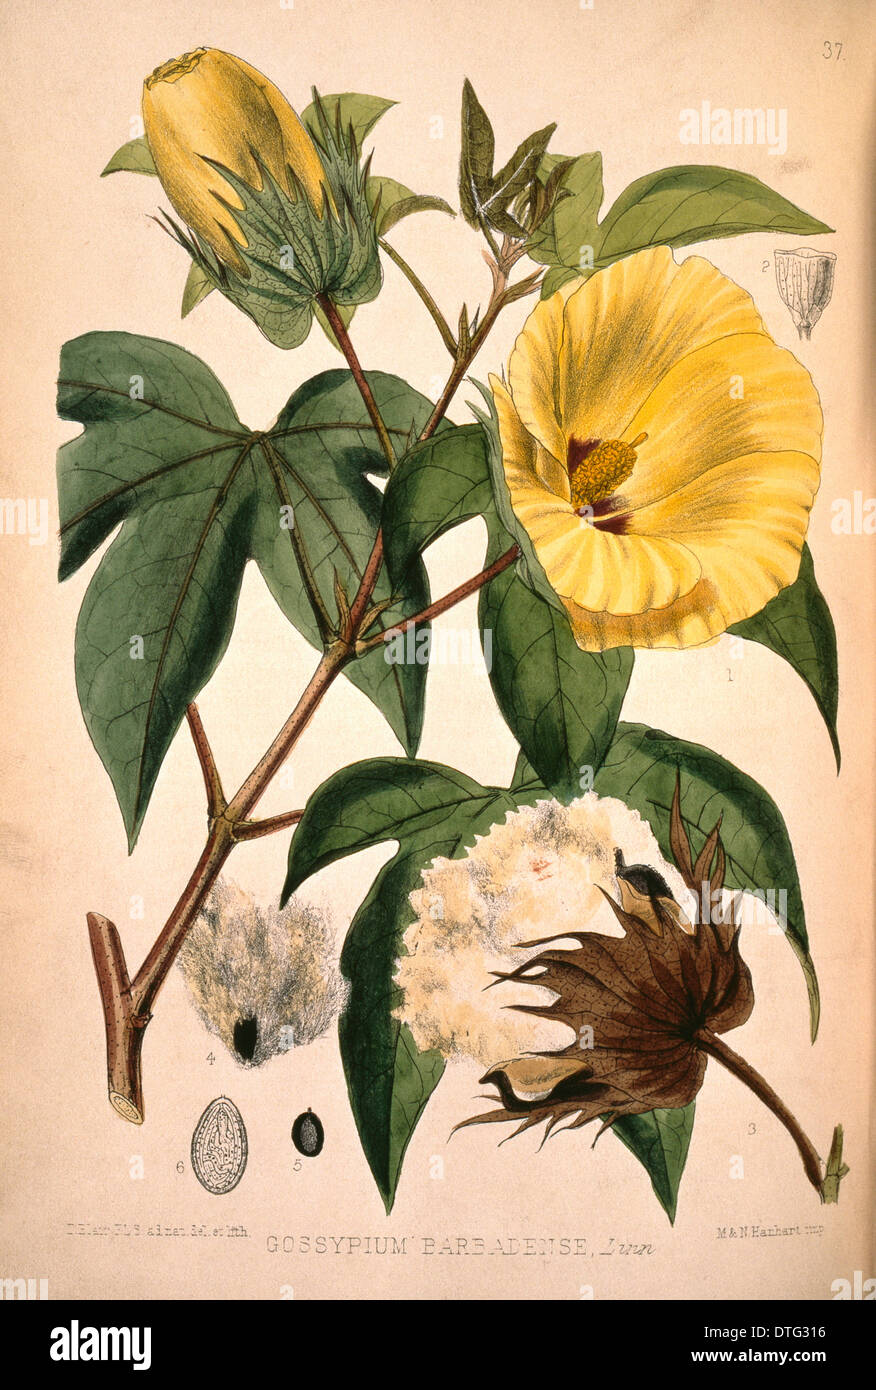 Gossypium barbadense, cotton plant Stock Photo